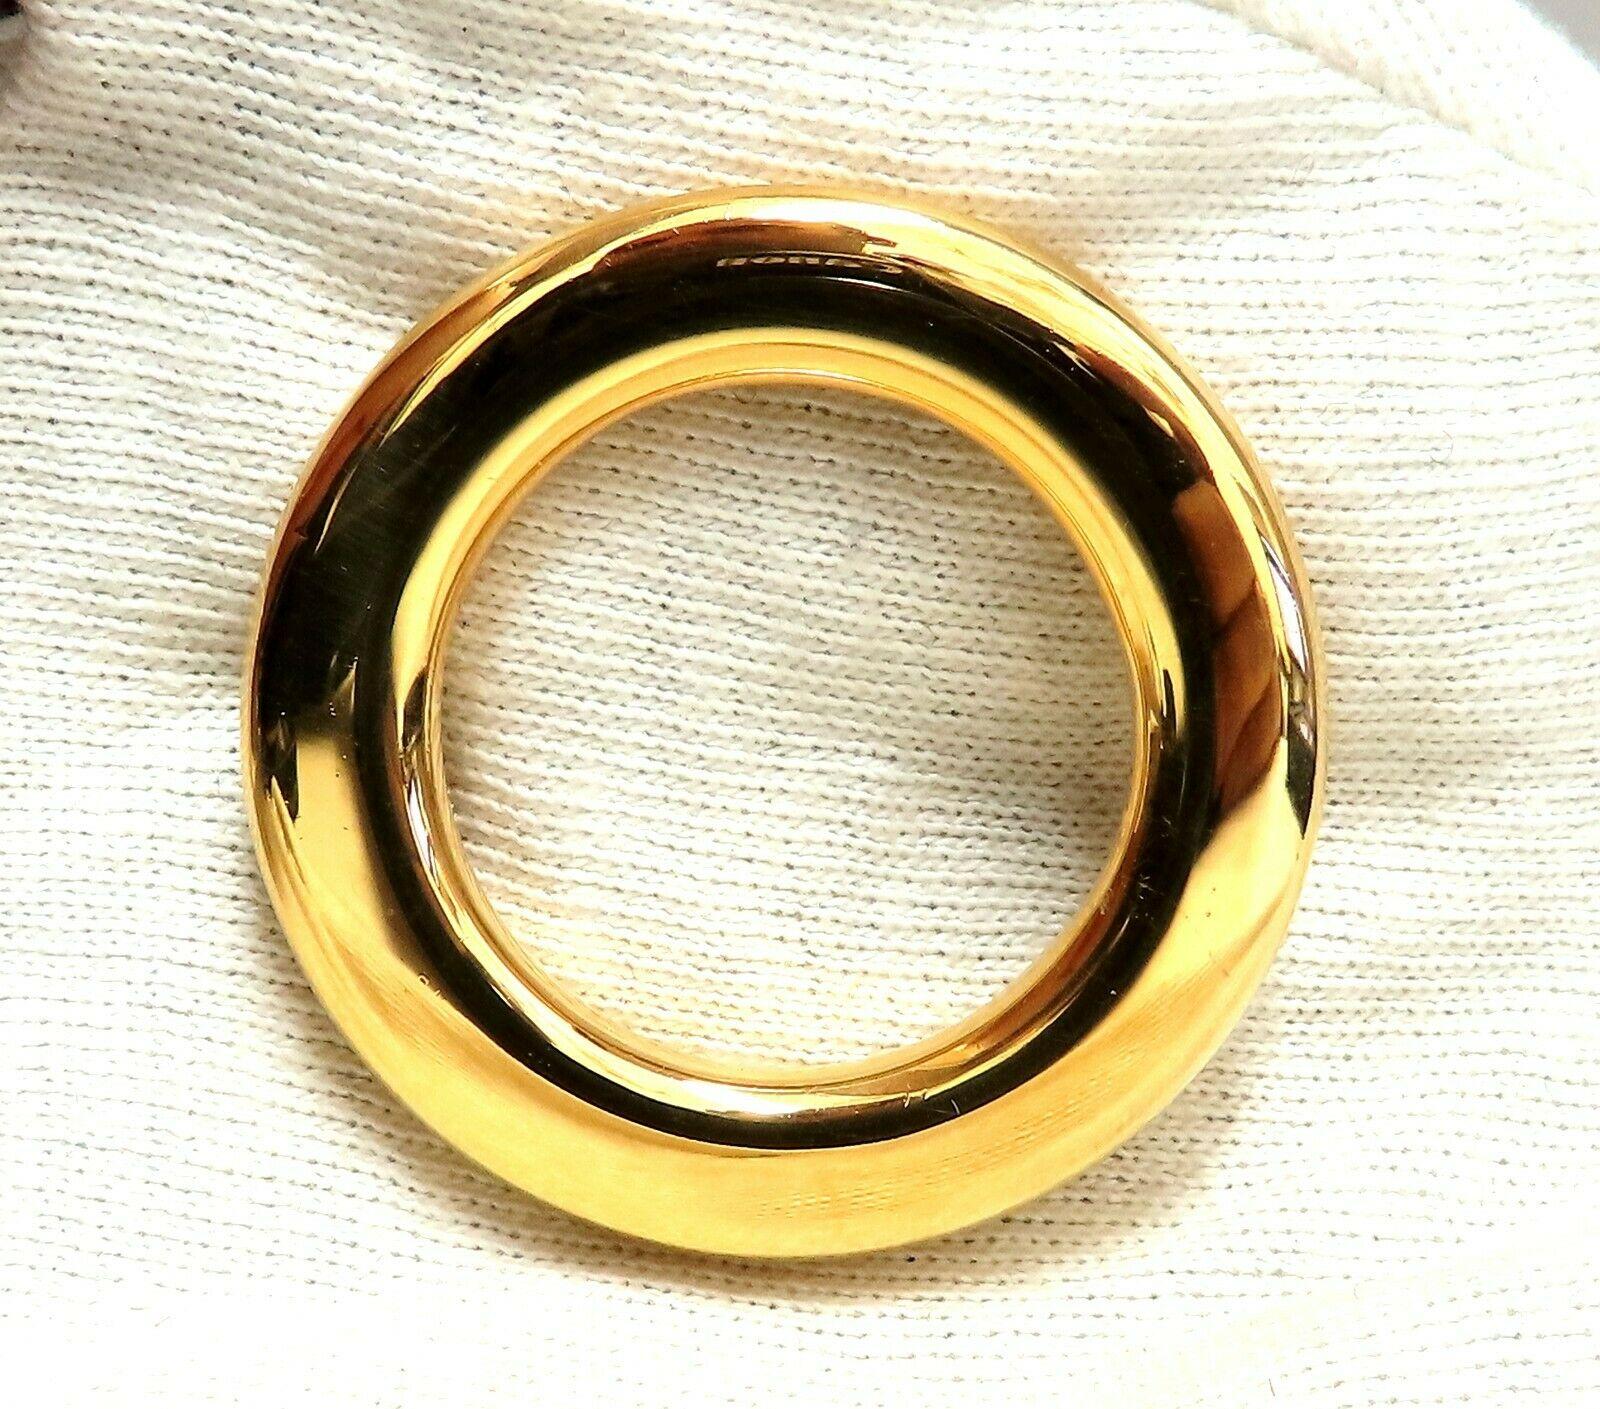 Circular Gold pin.

1.6 inch Diameter

1.04 inch inner opening

.32 inch frame

14kt. yellow gold 

8.9 grams